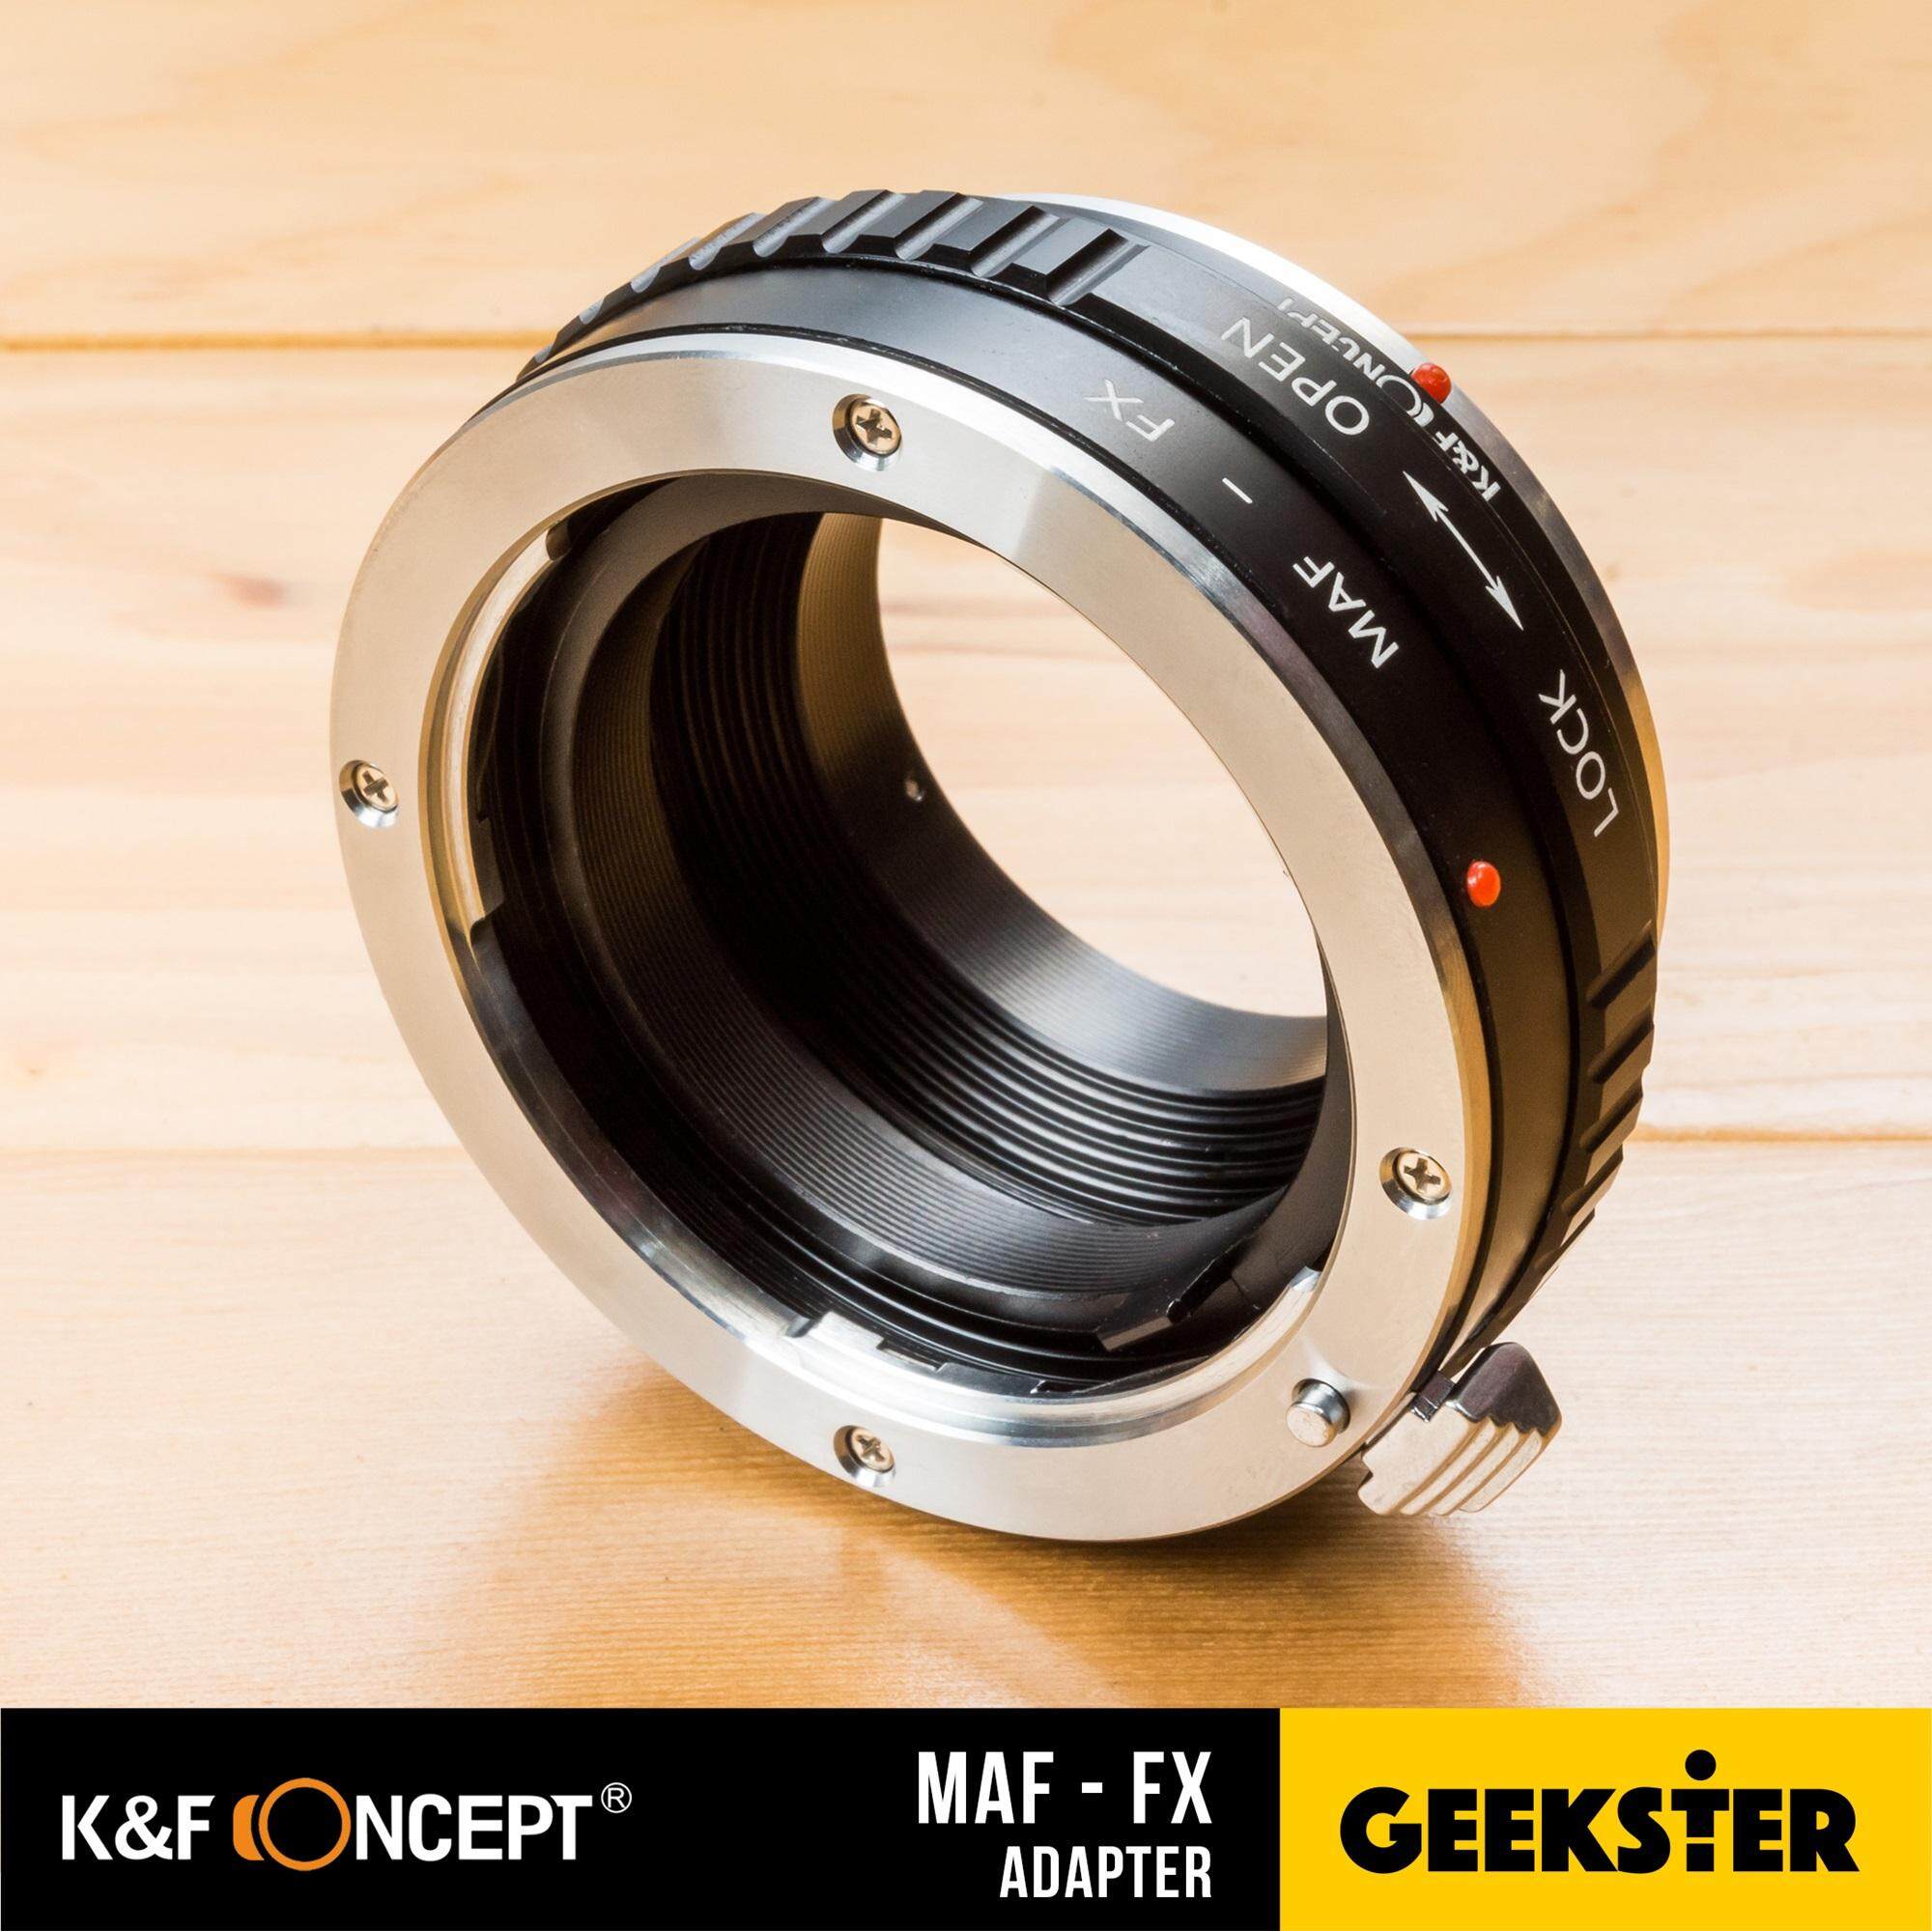 K&F MAF-FX Adapter แปลงเลนส์ Minolta AF / Minolta A เพื่อเอามาใส่กล้อง Fuji Mirrorless ได้ทุกรุ่น ( Lens mount adapter Mount MAF For Fuji ) ( เมาท์แปลง อแดปเตอร์ ) ( MAF-FX / MAF-X ) ( MAF FX / MAF X ) ( Geekster )